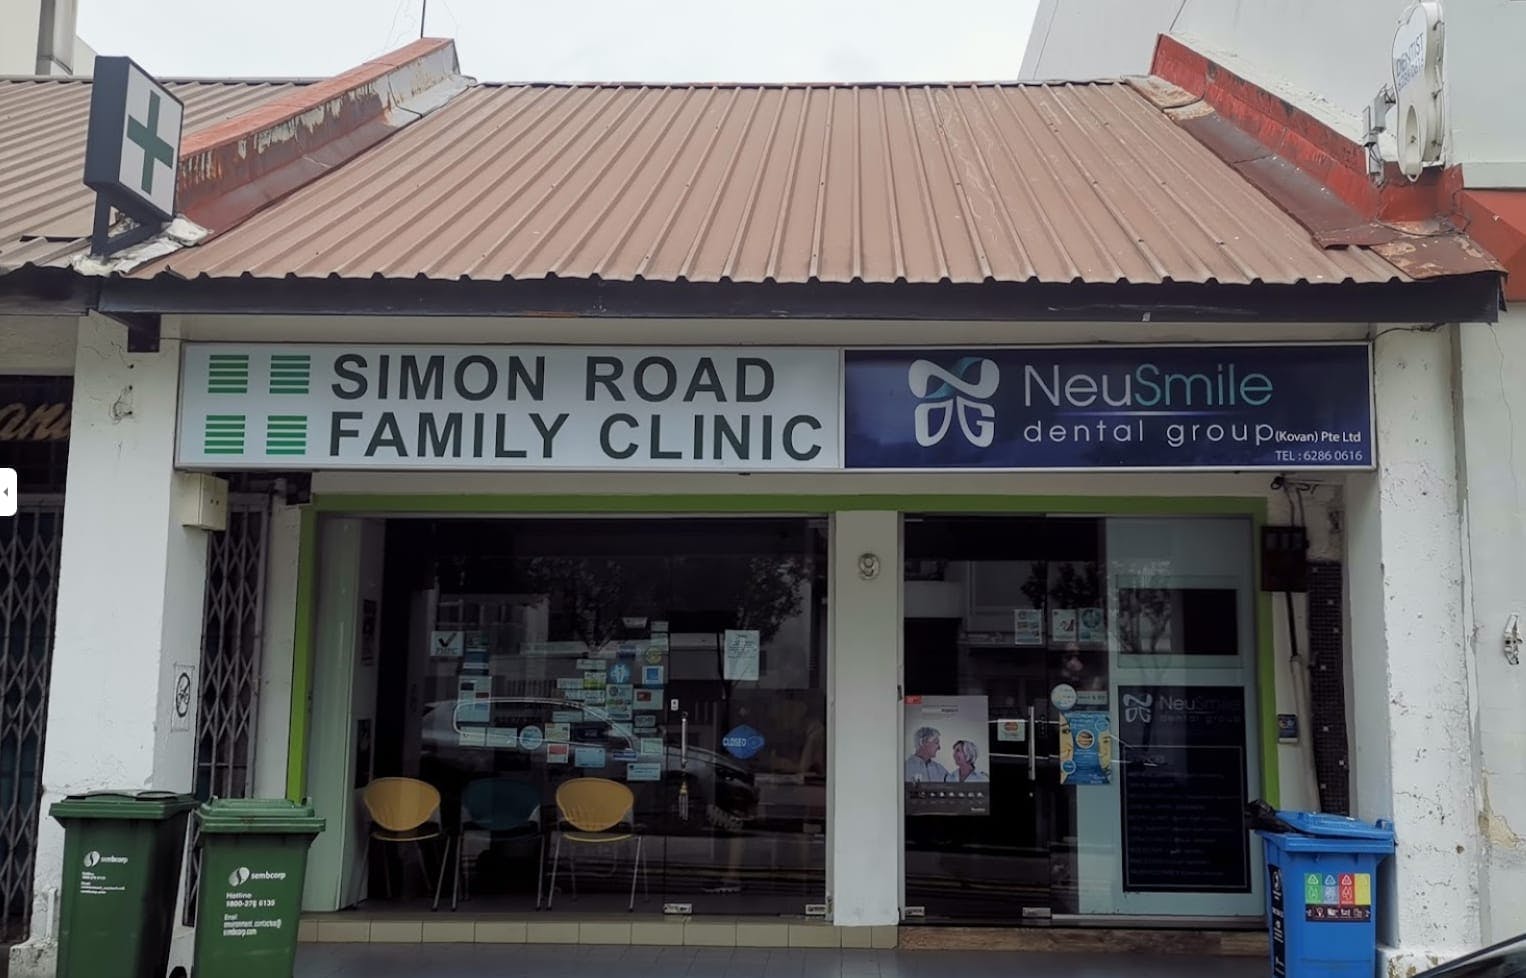 Simon Road Family Clinic